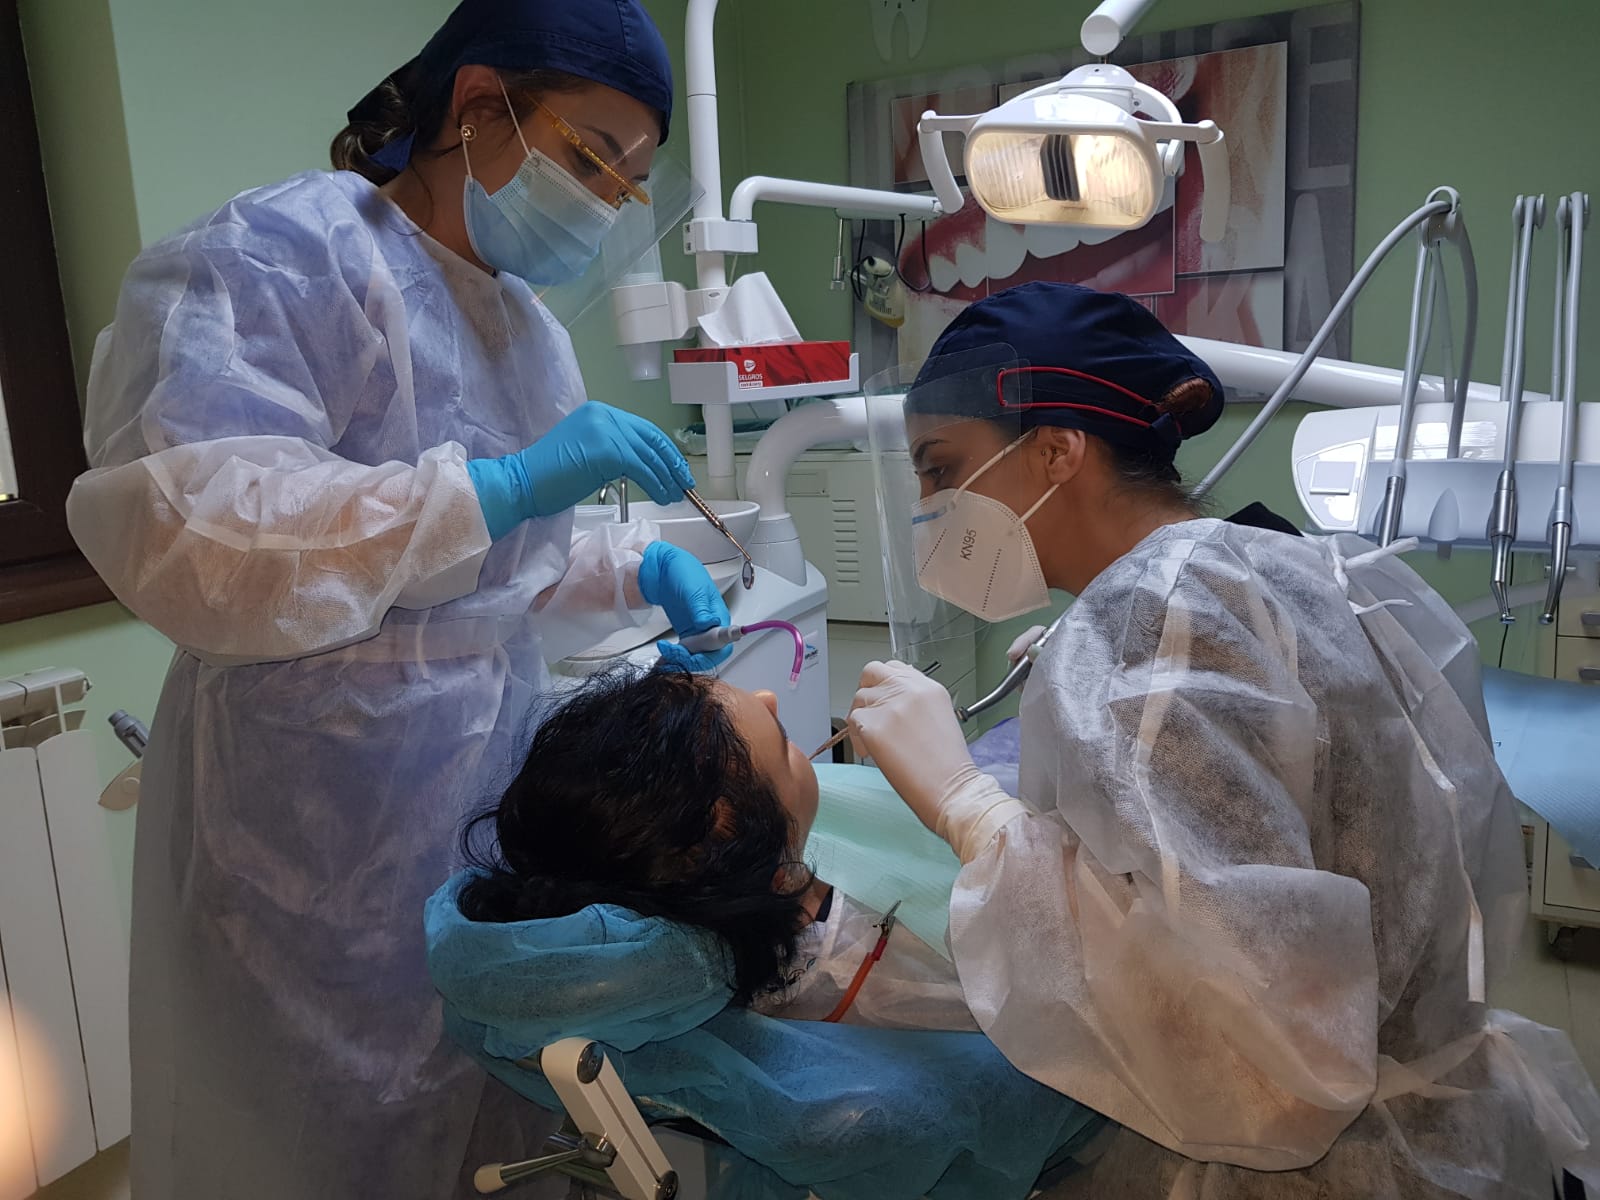 dentiști datând pacienții